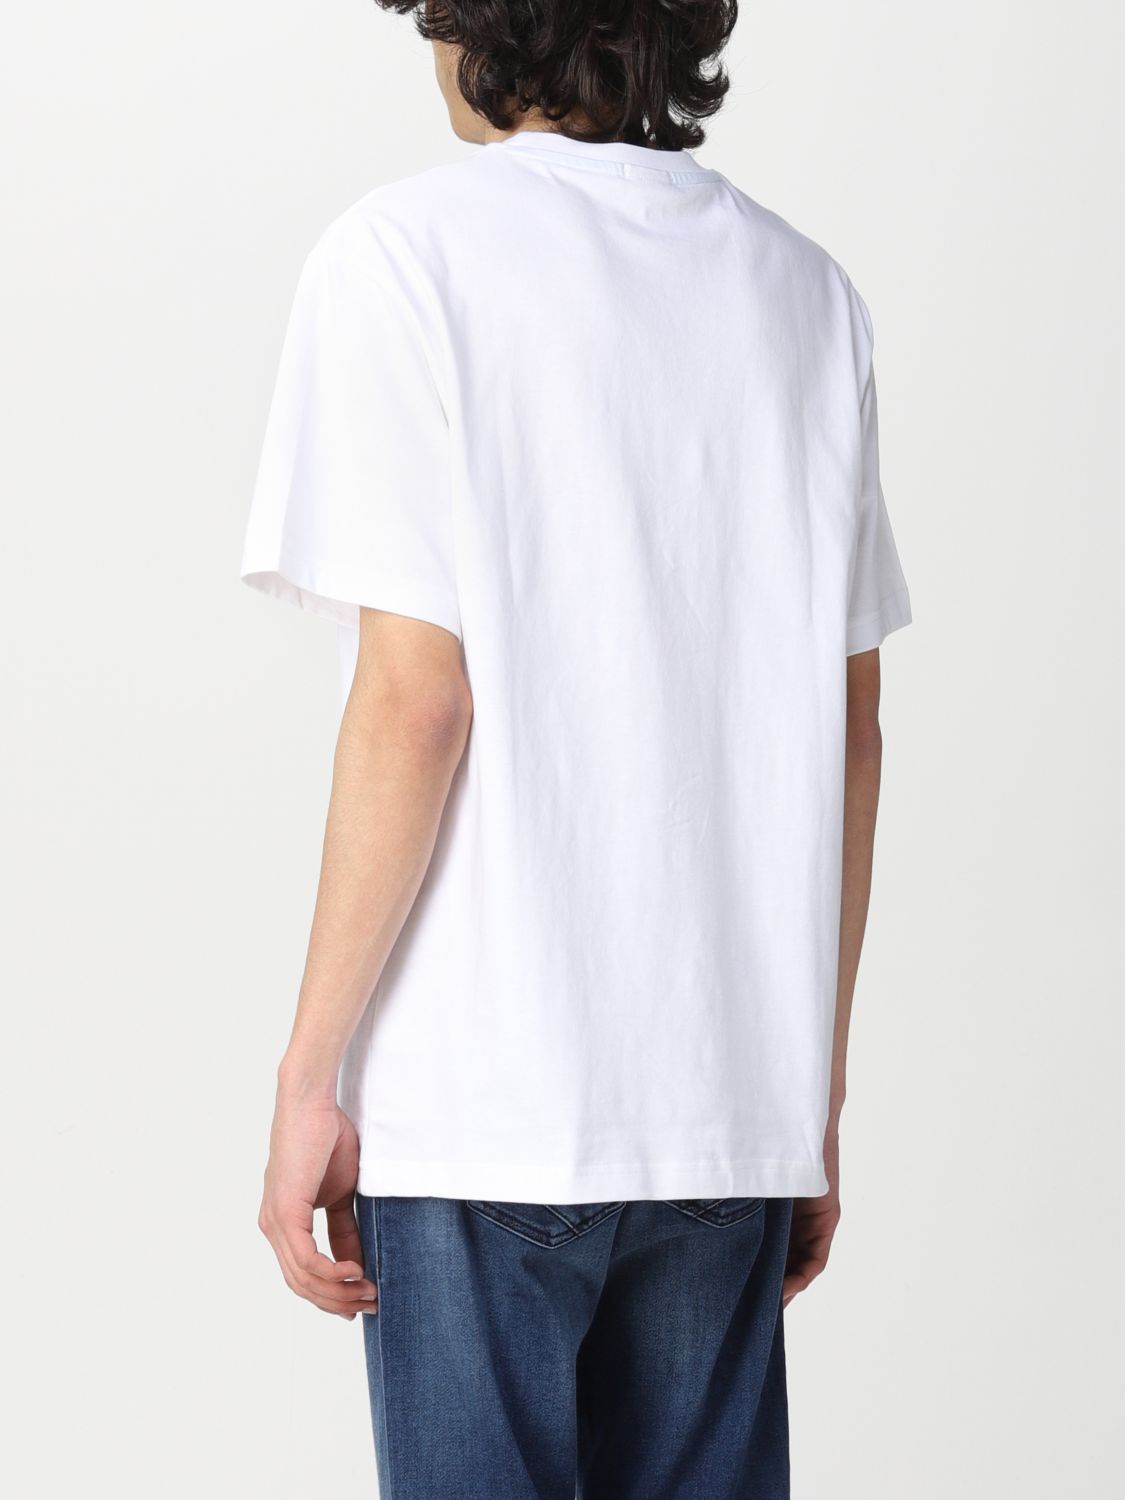 T-shirt Lacoste L!Ve: Lacoste L! Ve t-shirt in cotton with logo white 2